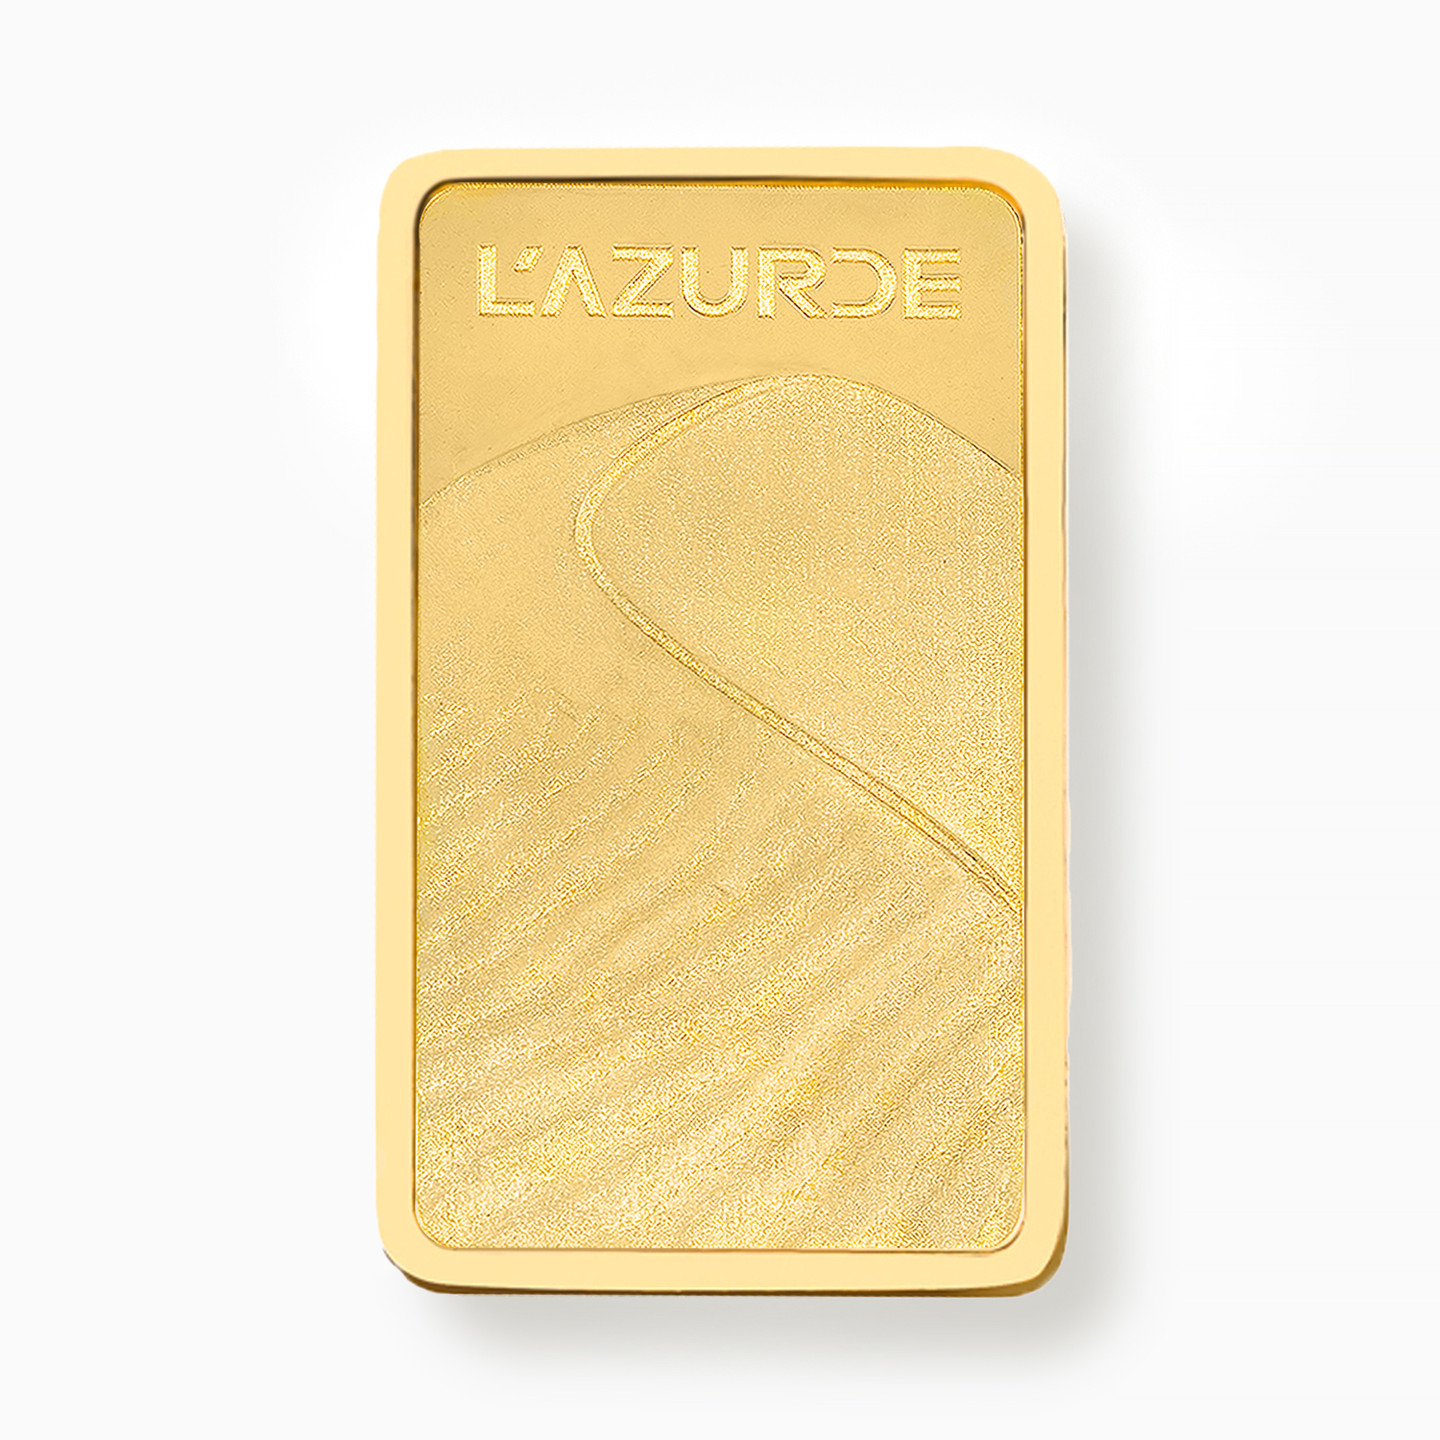 24K Gold Bar 10g - 3